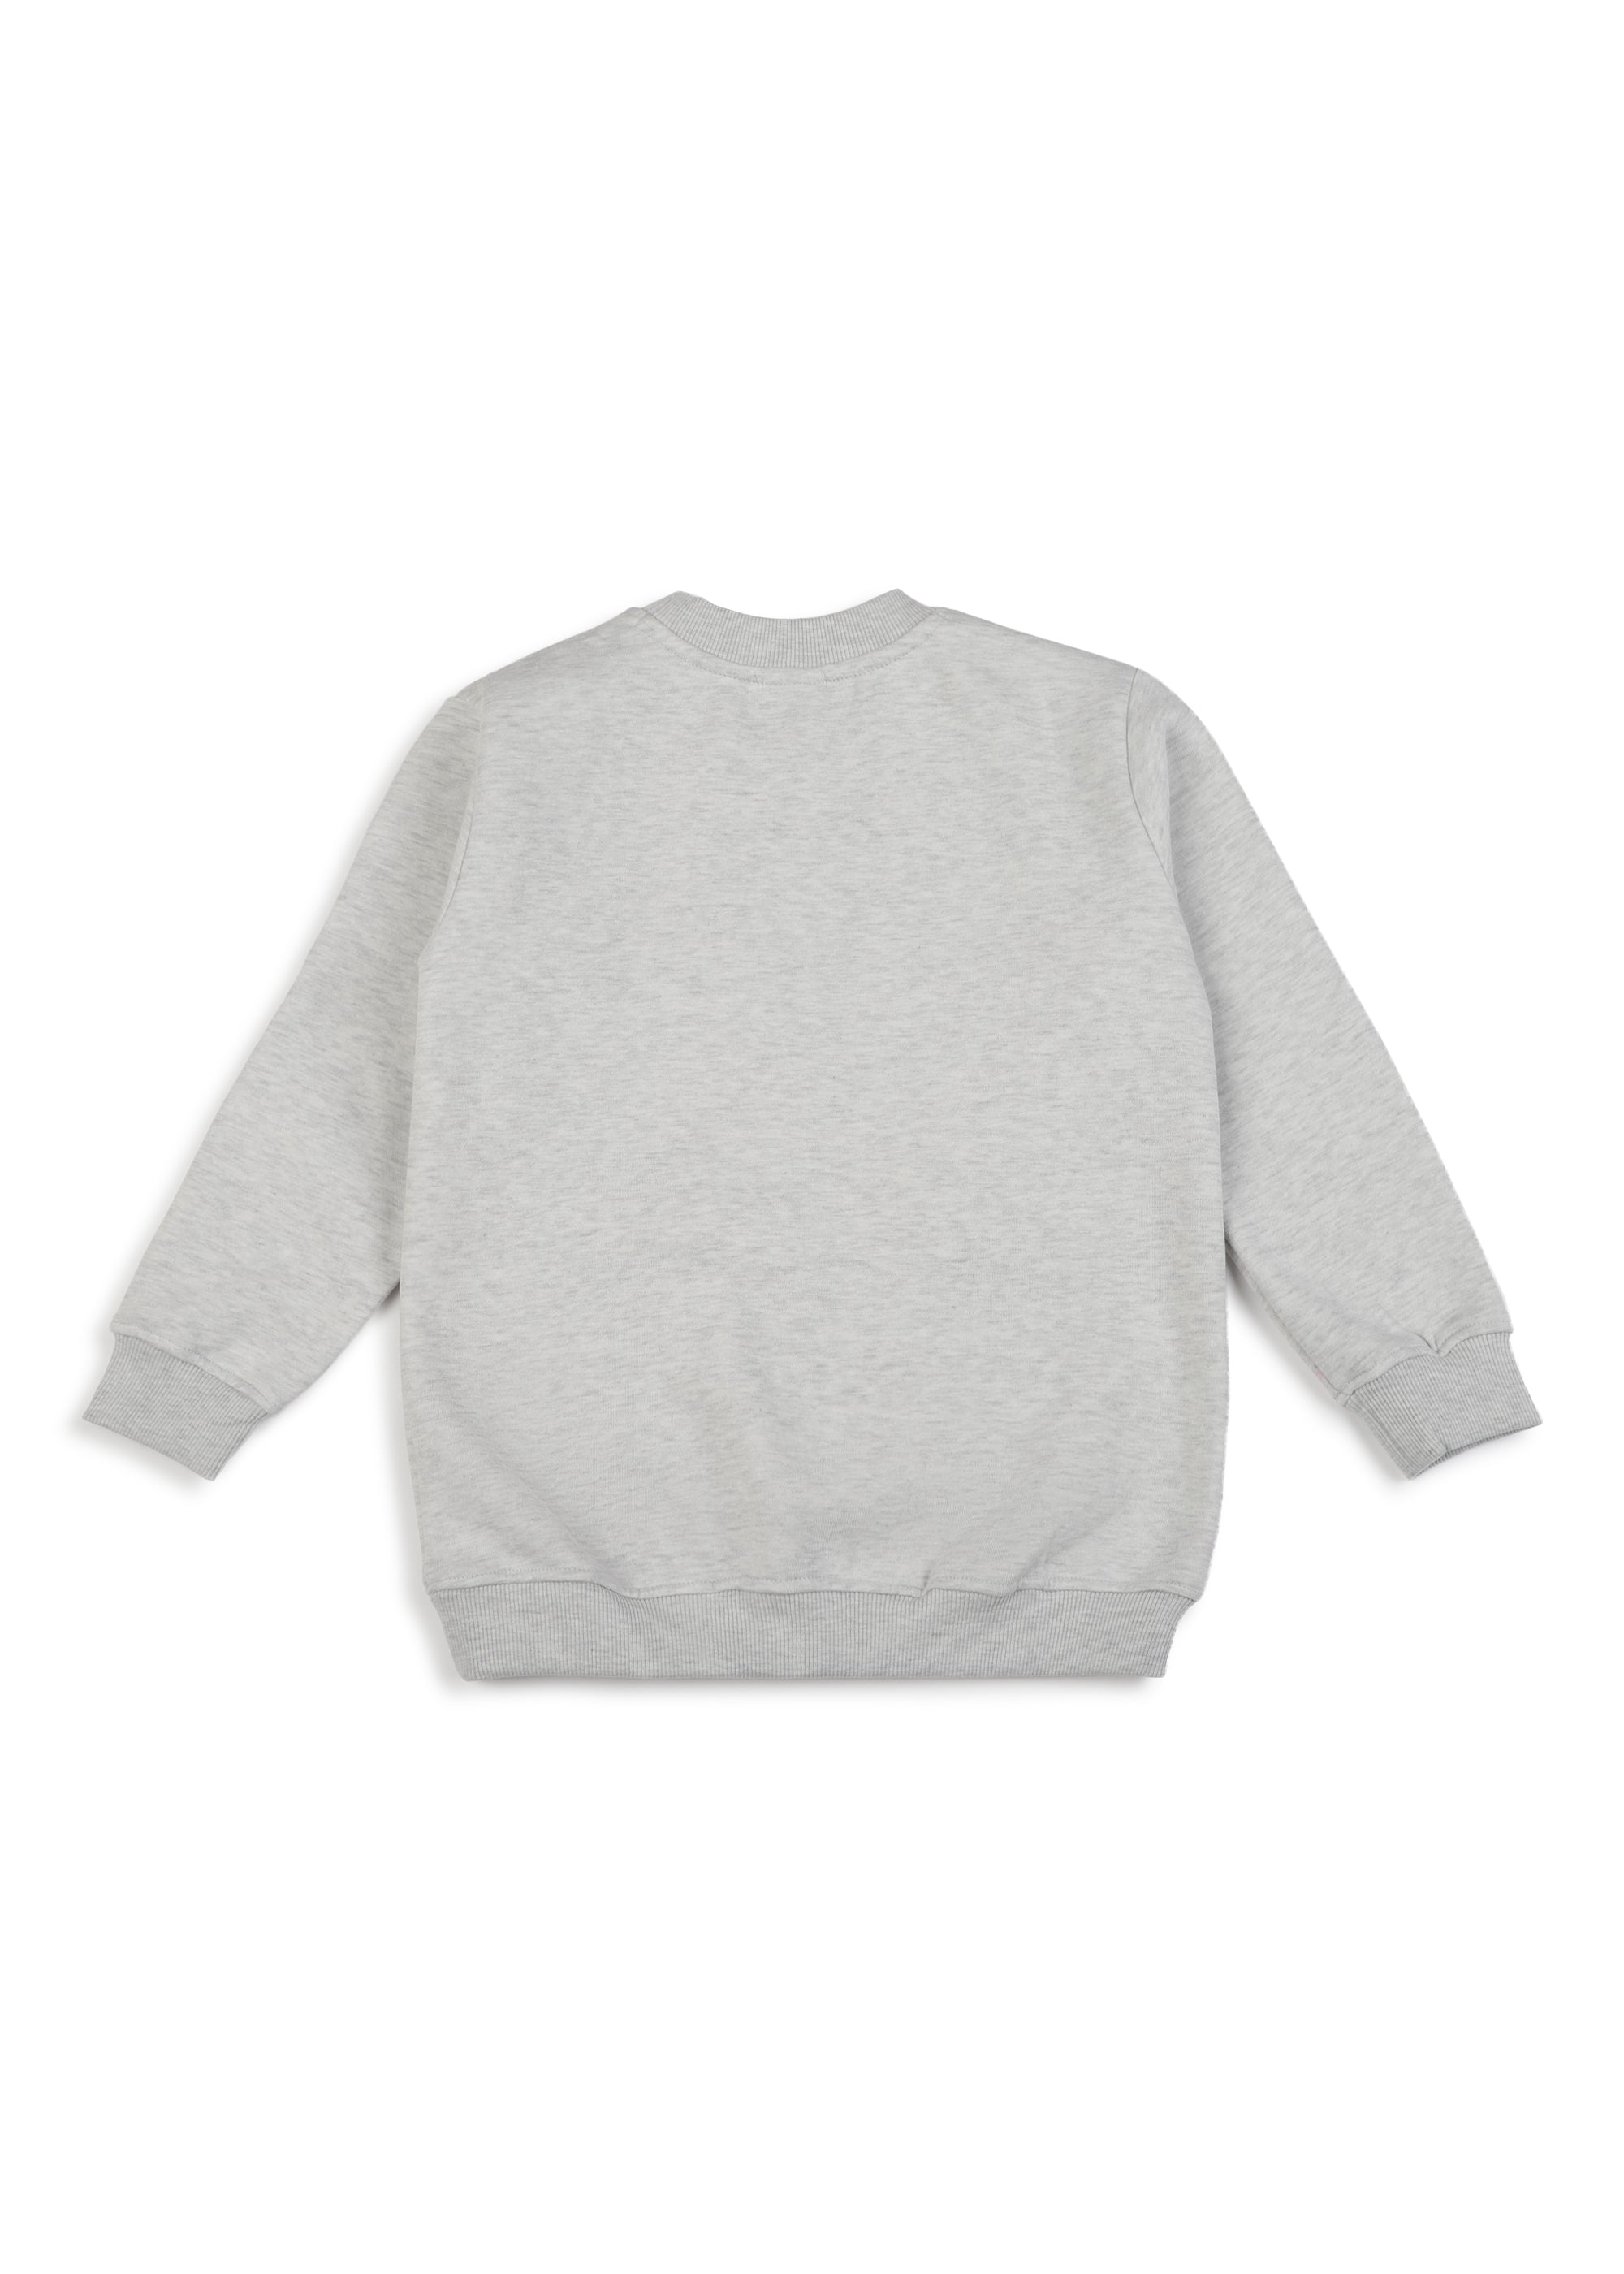 Have a Pawsome Day Warm Fleece Kids Sweatshirt